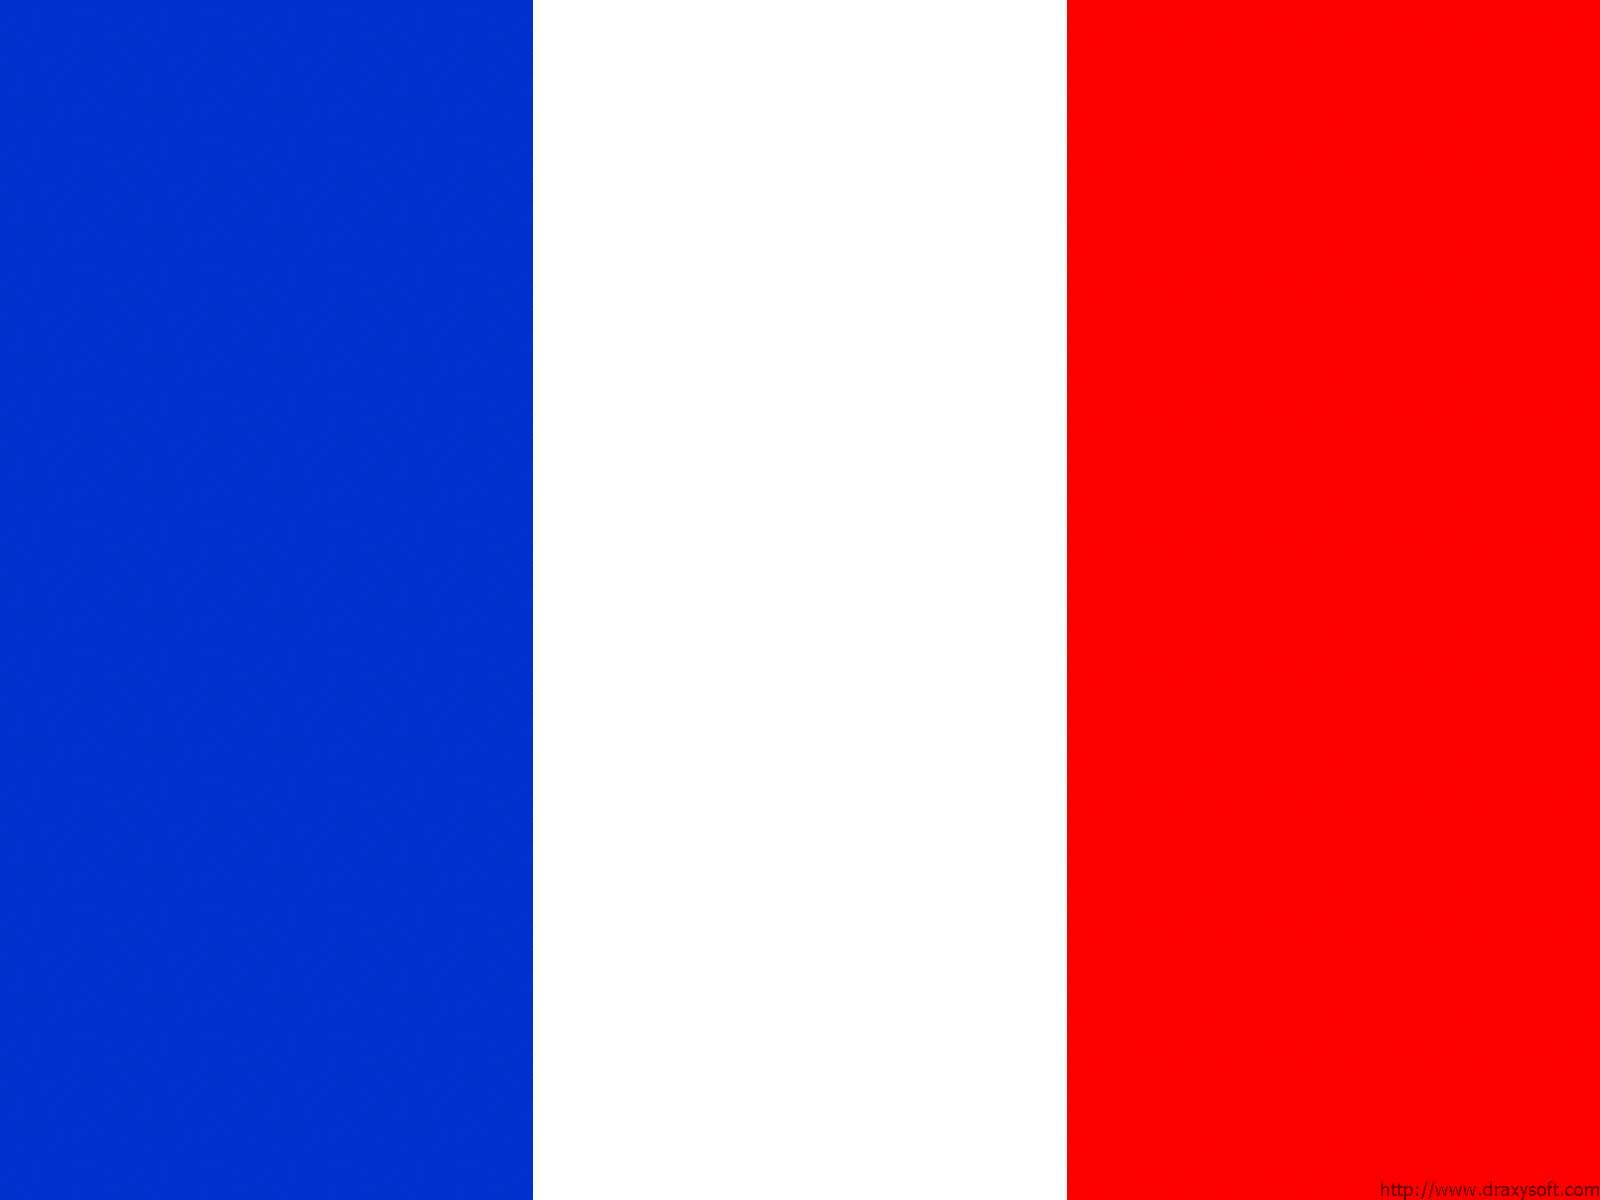 [Image: French_flag.jpg]